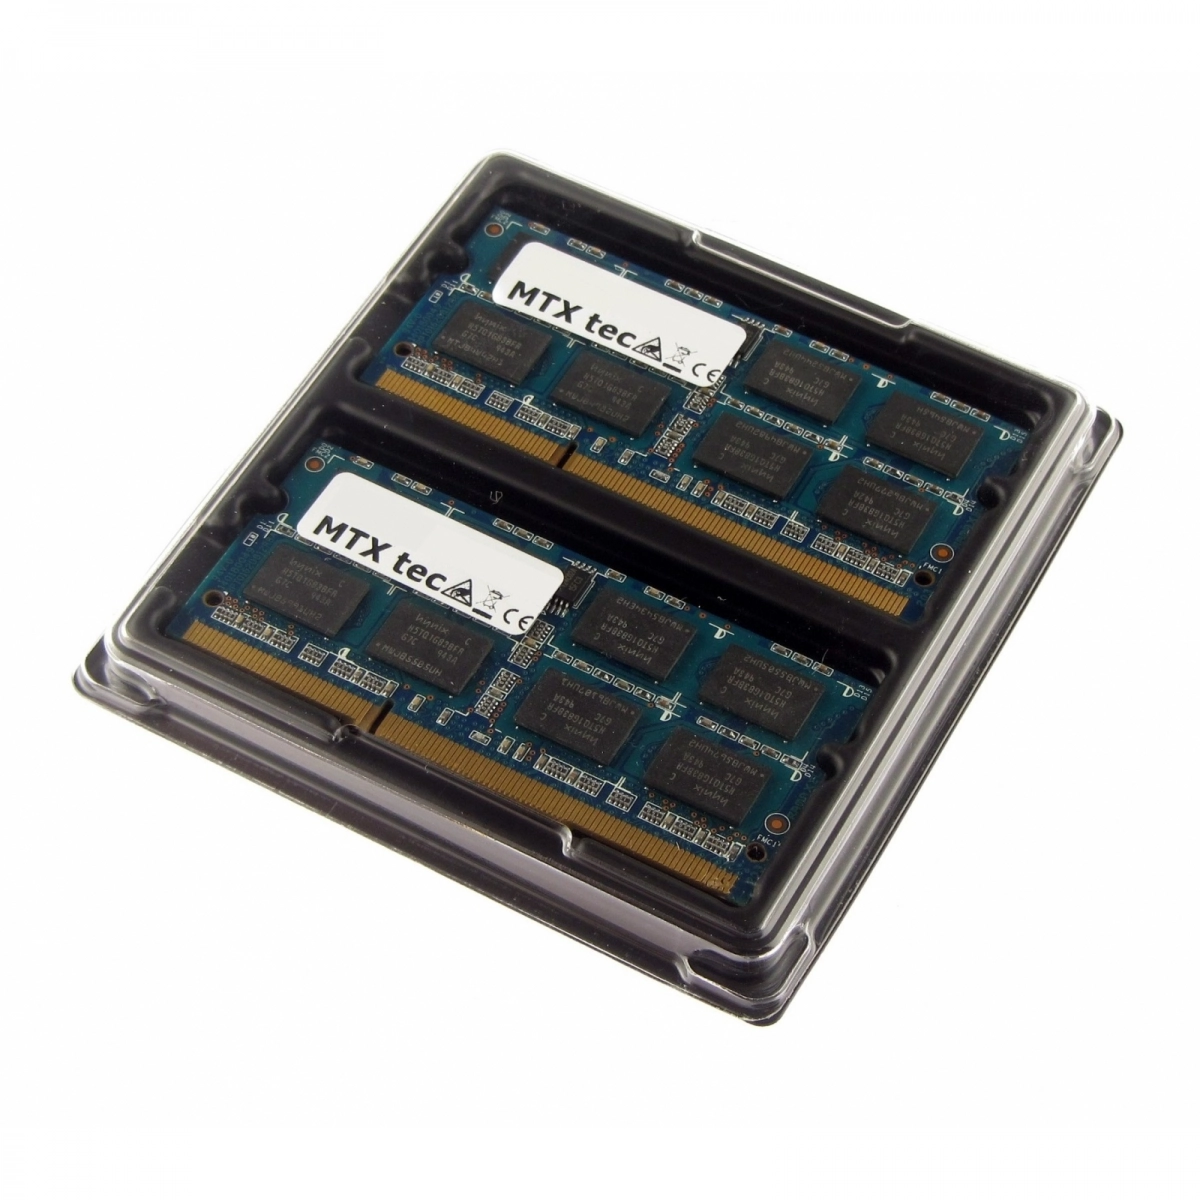 MTXtec 4GB Kit 2x 2GB DDR3 1333MHz SODIMM DDR3 PC3-10600, 204 Pin RAM Laptop-Speicher